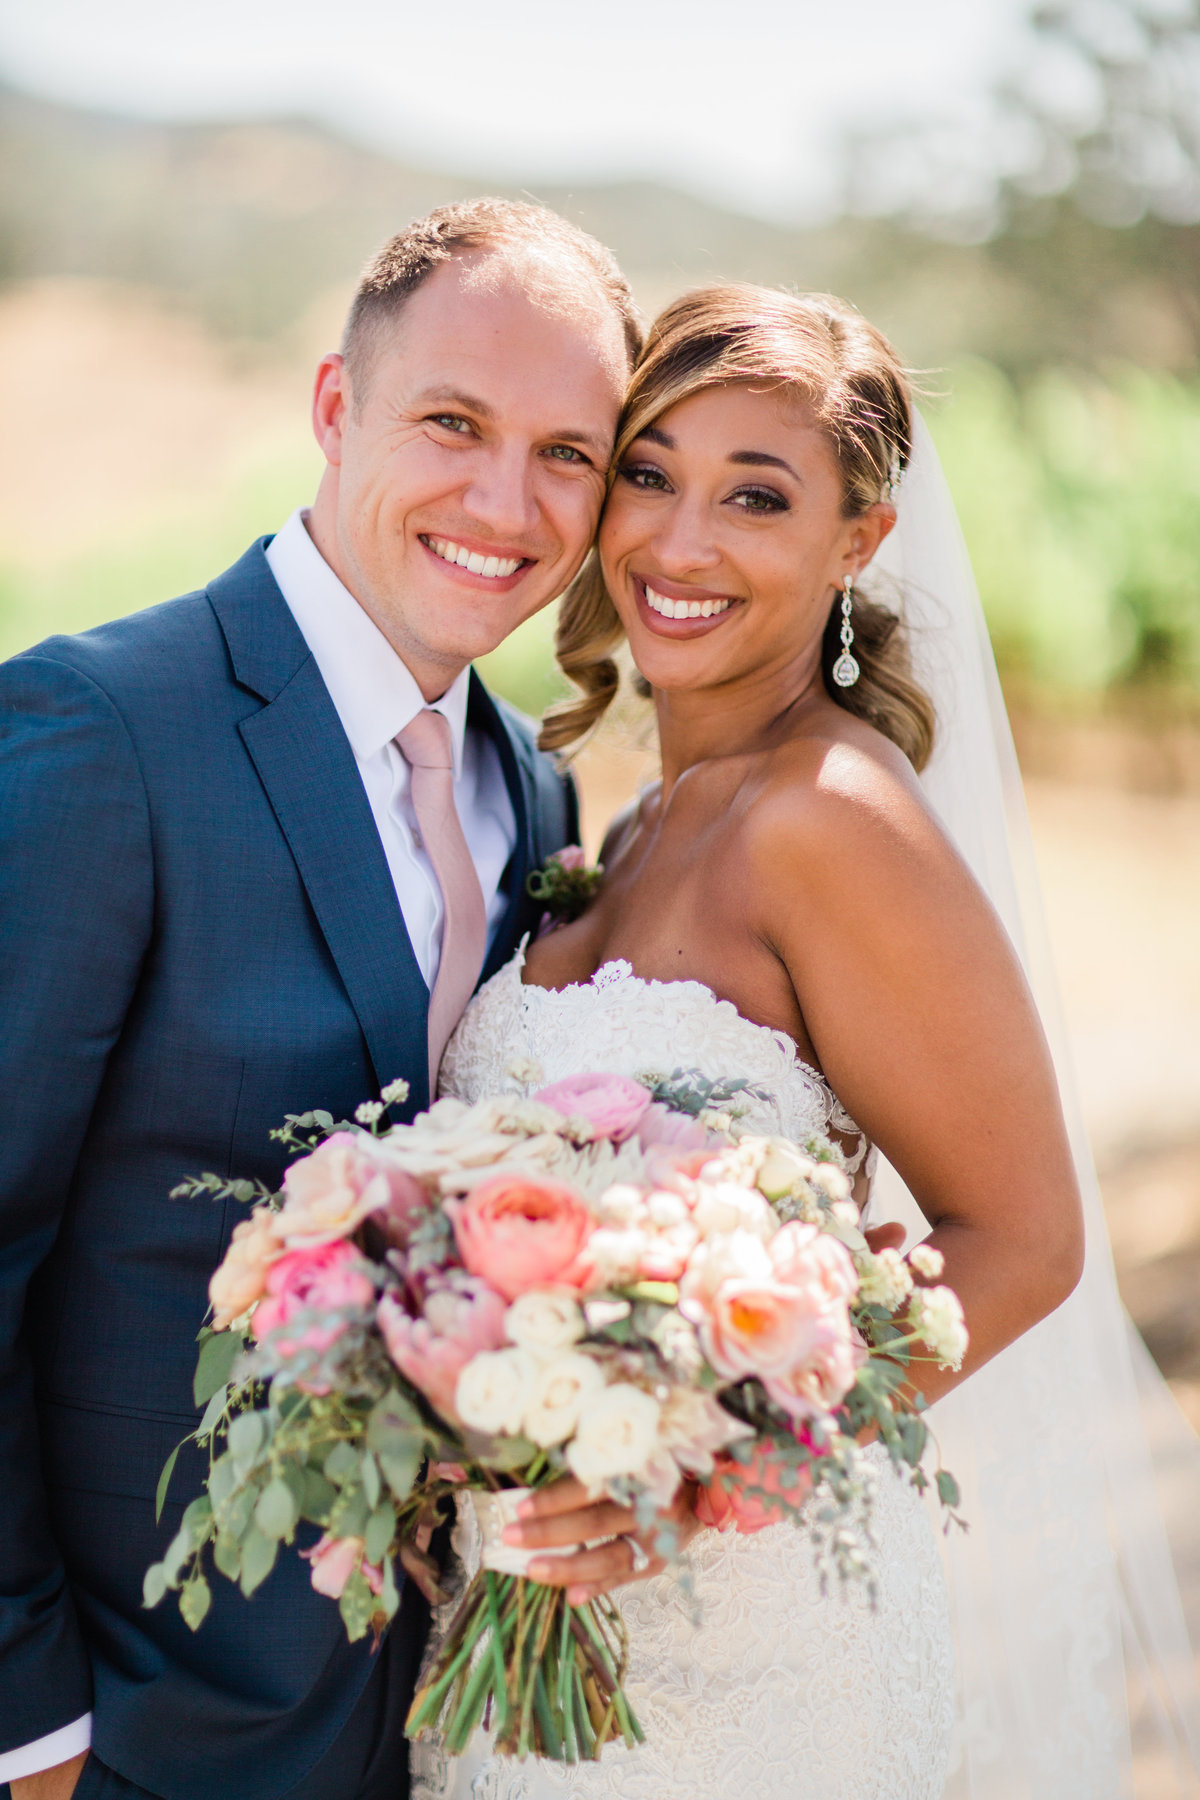 Jenna & Andrew's Oyster Ridge Wedding | Paso Robles Wedding Photographer | Katie Schoepflin Photography462